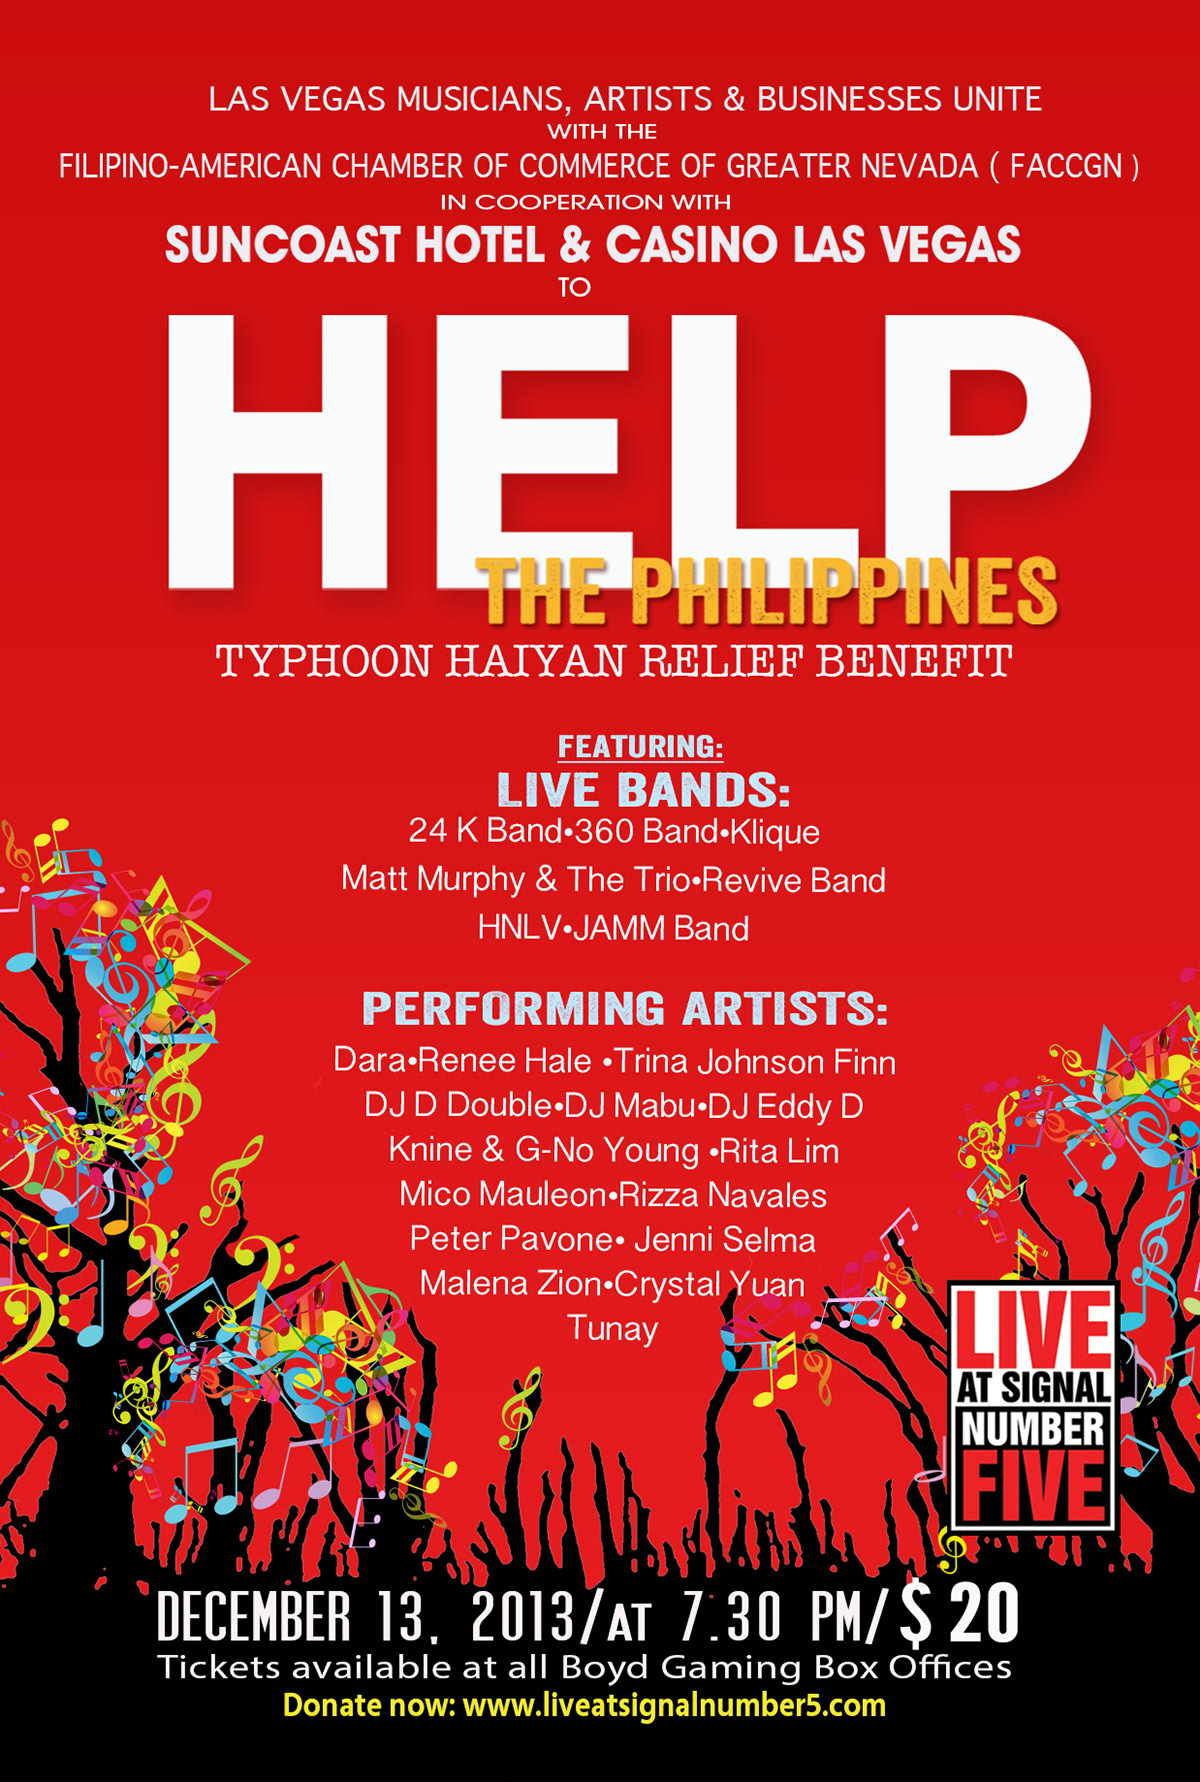 Typhoon Haiyan live@signalno5 benefit Las Vegas concert